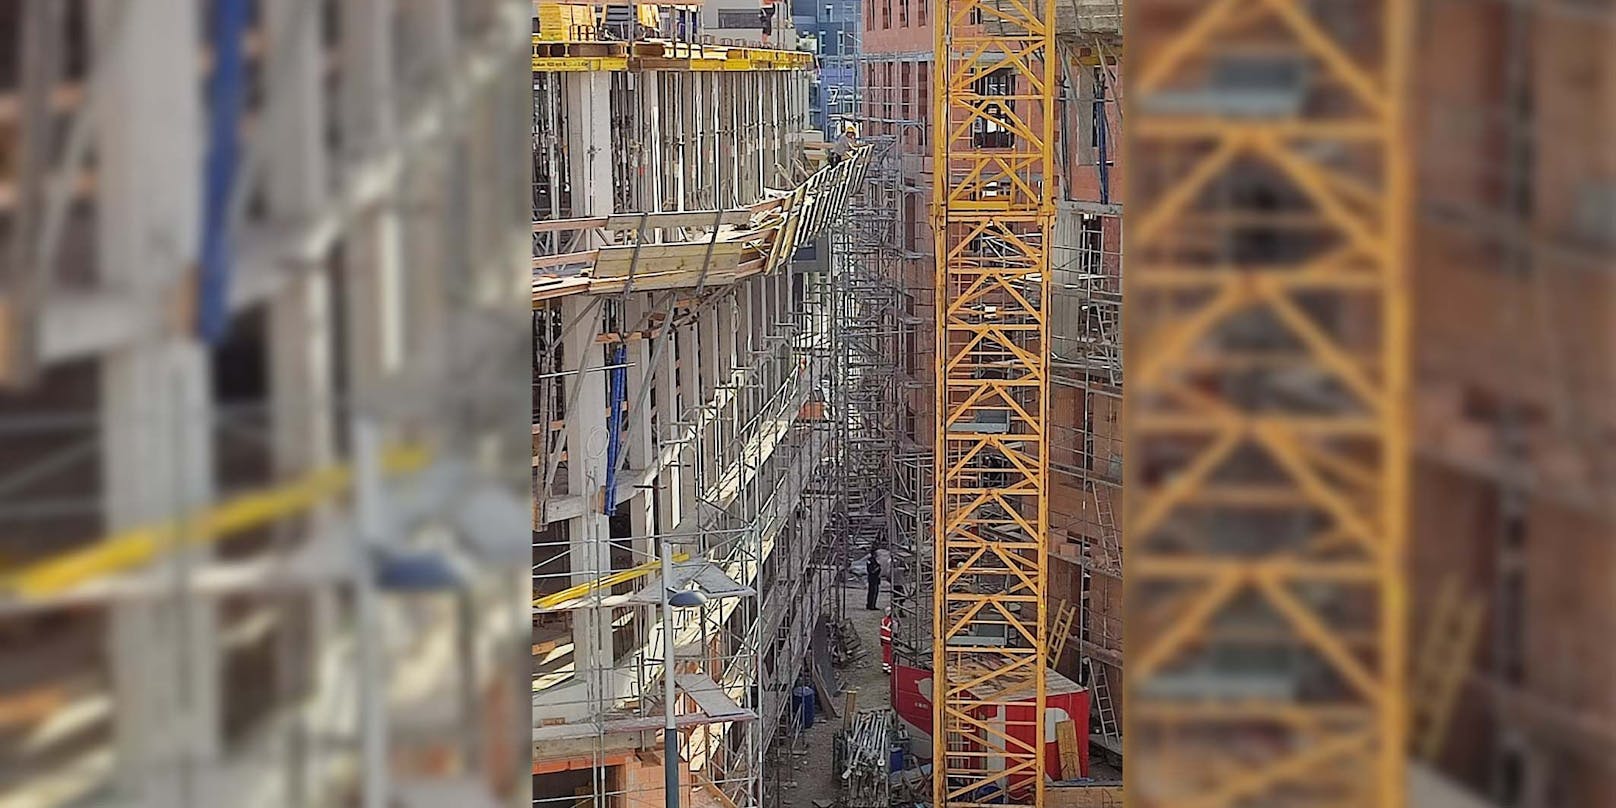 Schwerer Unfall: Bauarbeiter fällt 6 Meter in die Tiefe